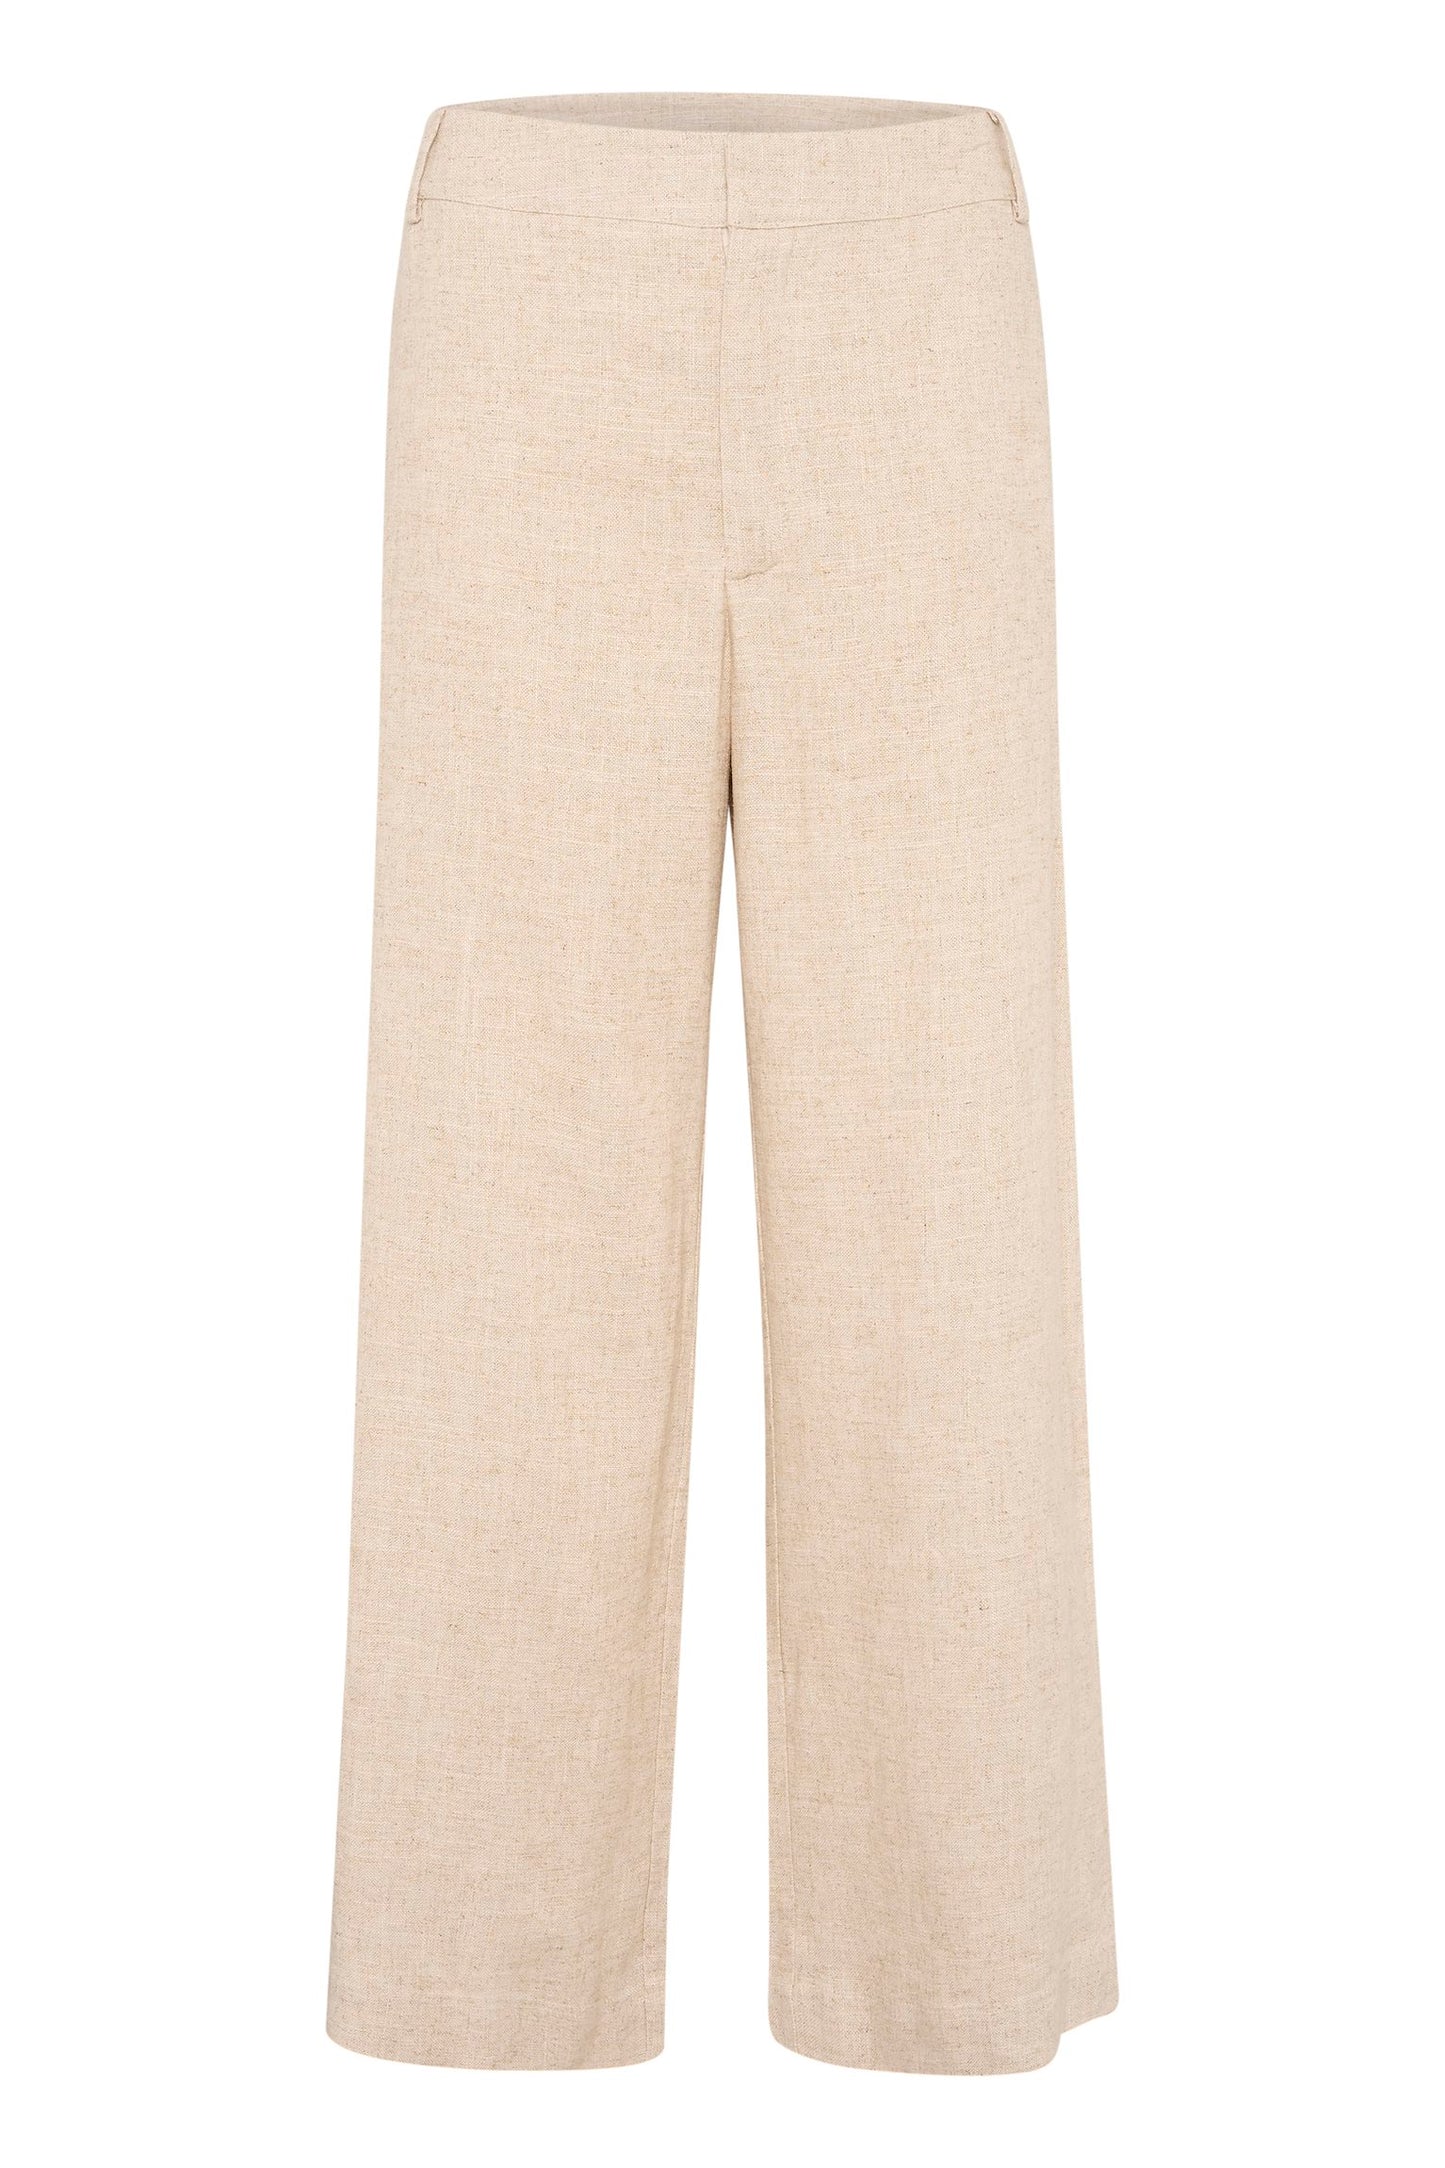 Lavita Trousers - My Essential Wardrobe